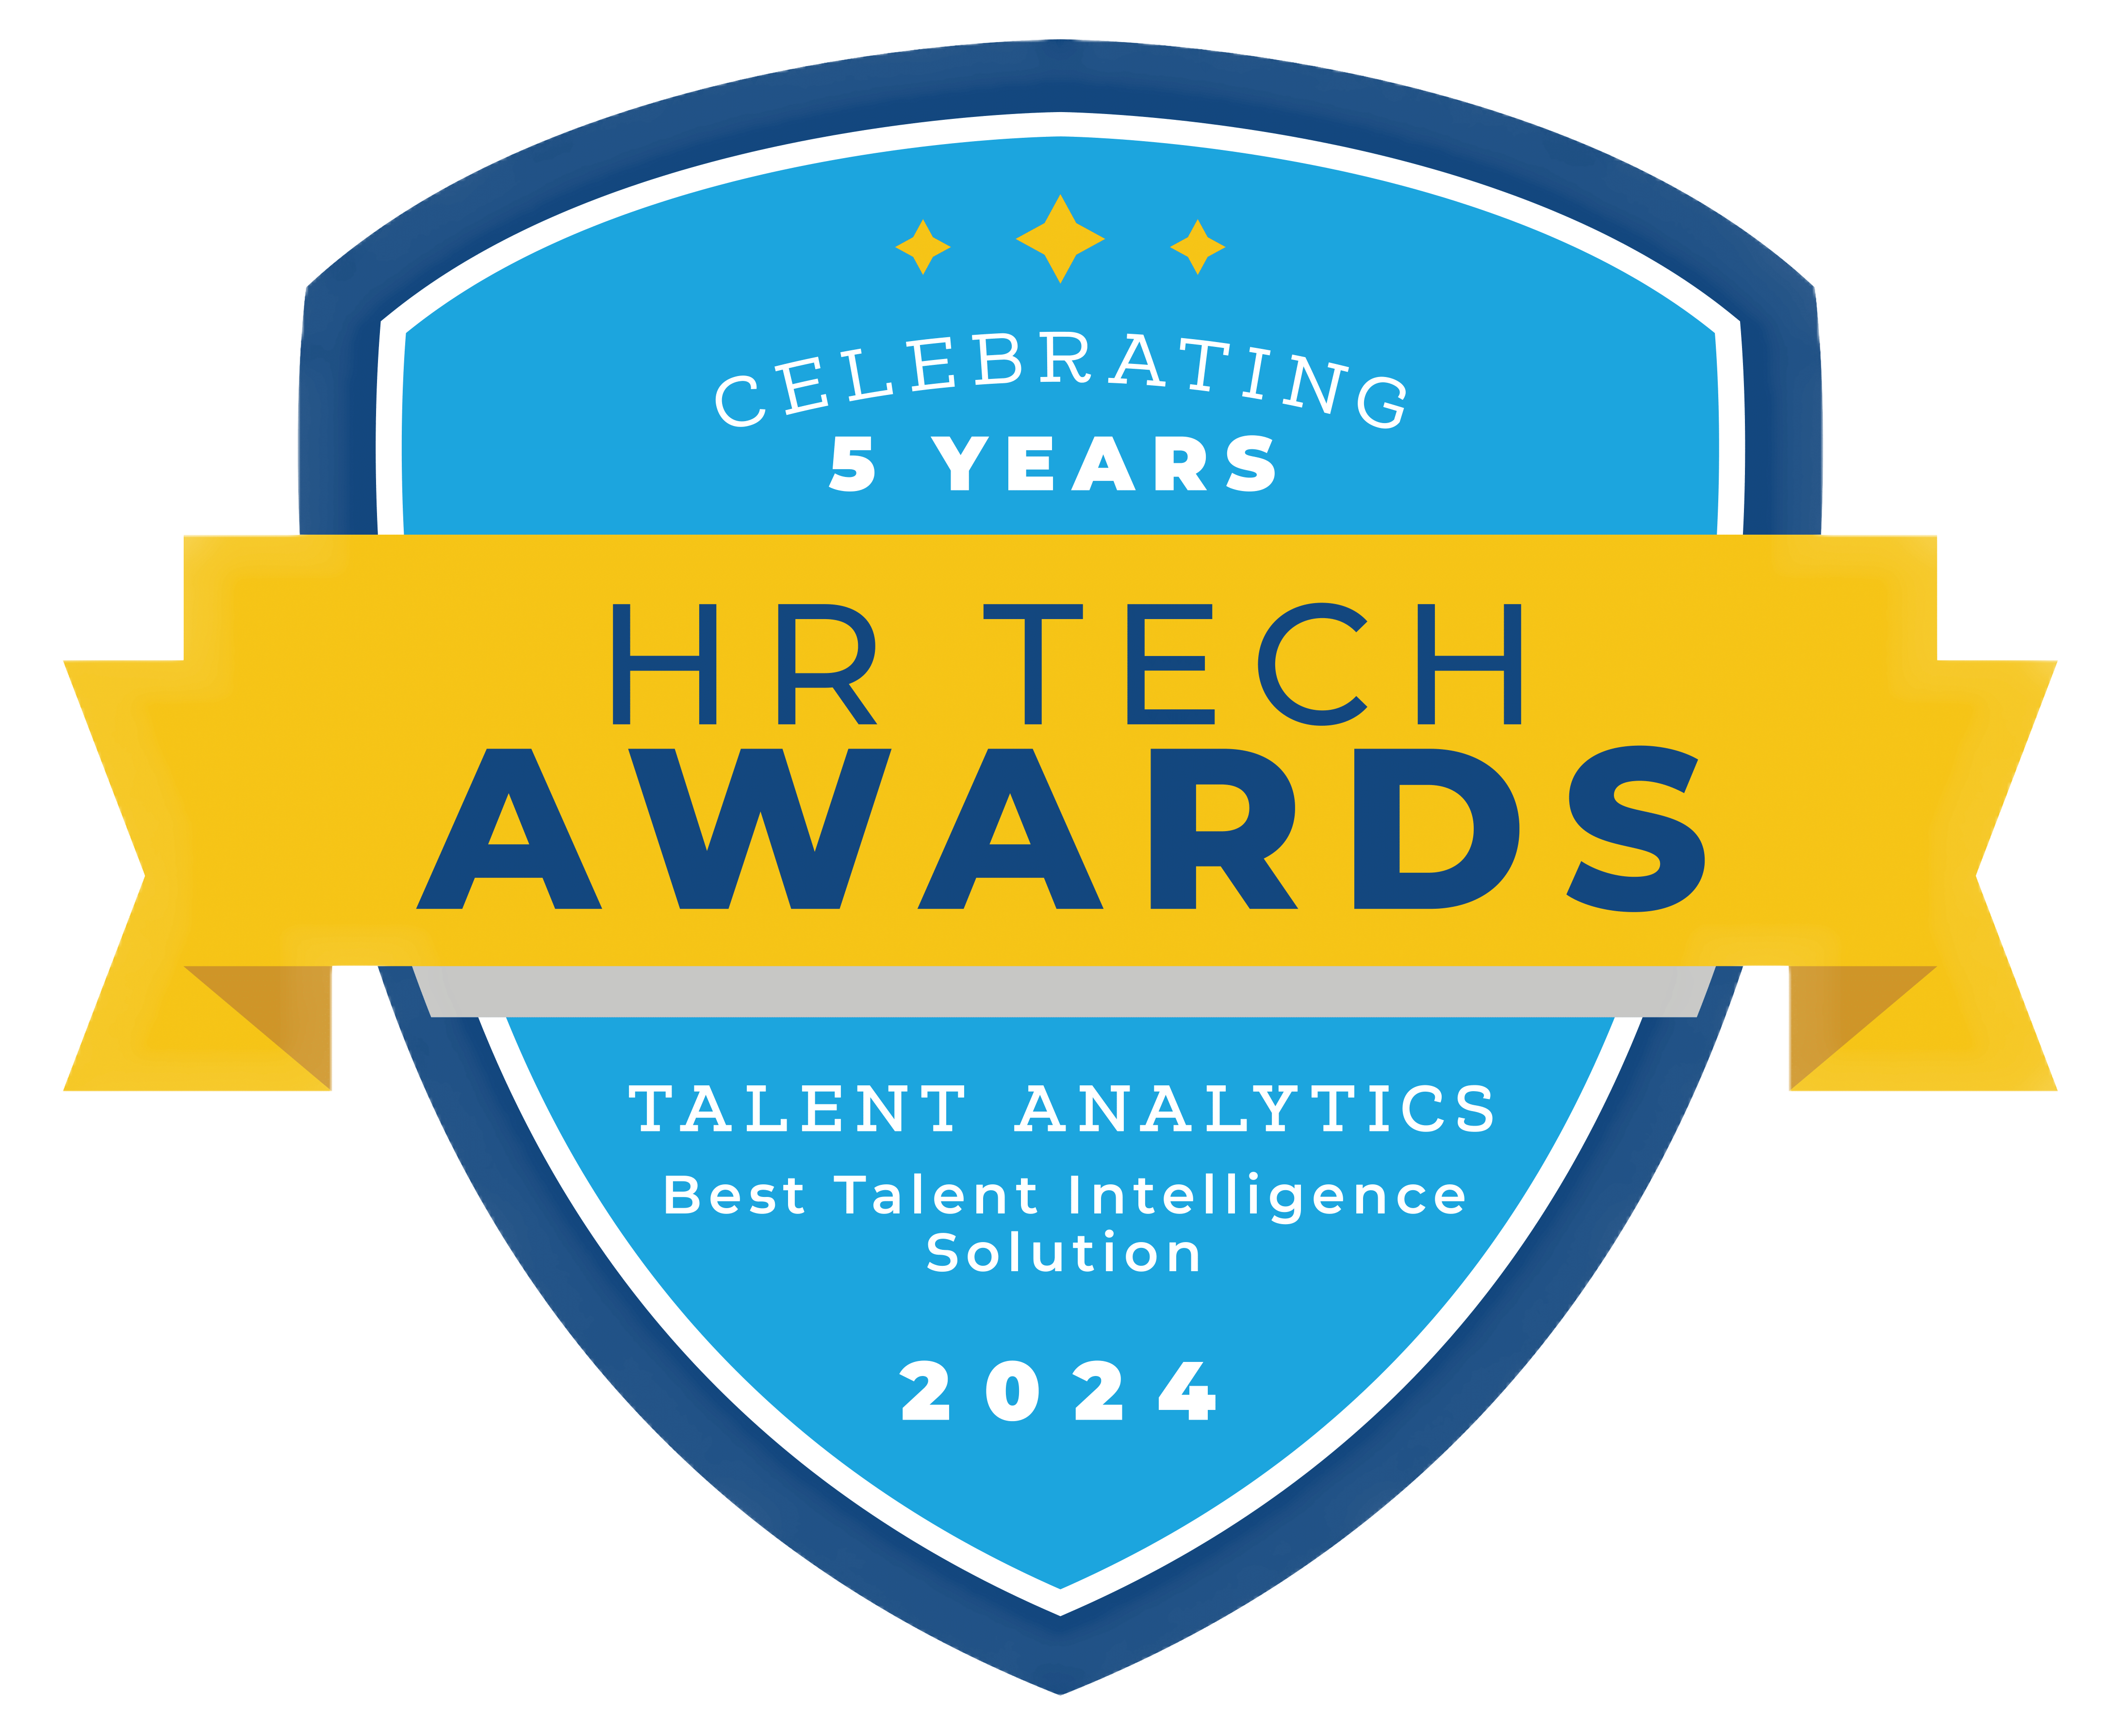 HR Tech Awards - Talent Analytics 2024